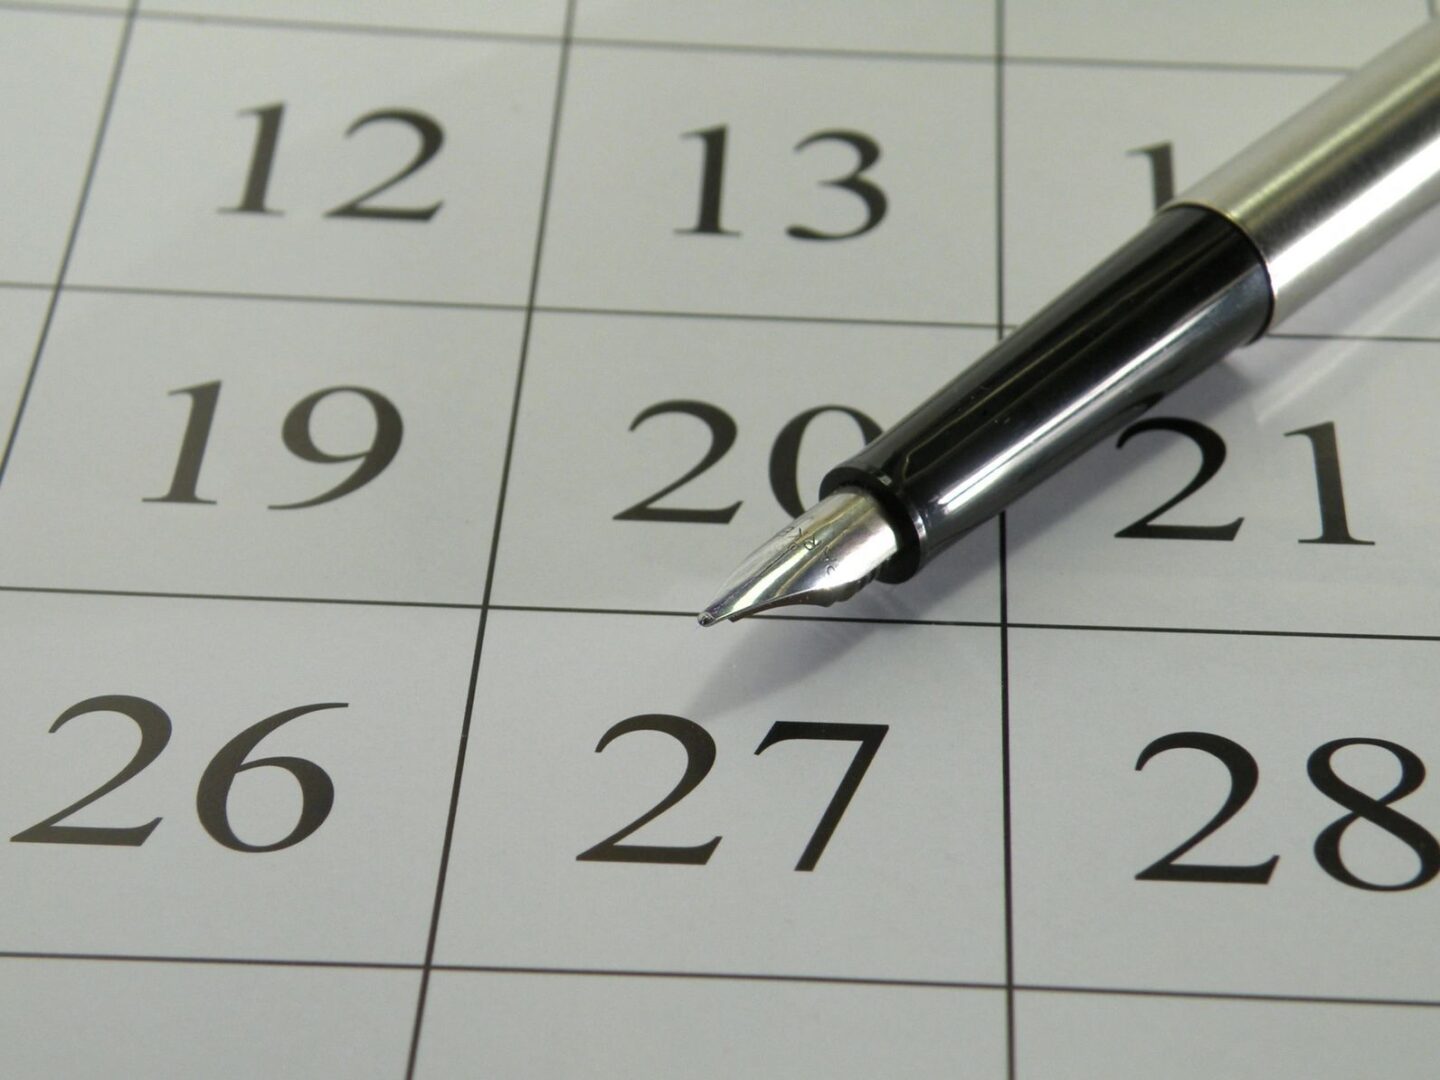 A close up of a pen on the calendar